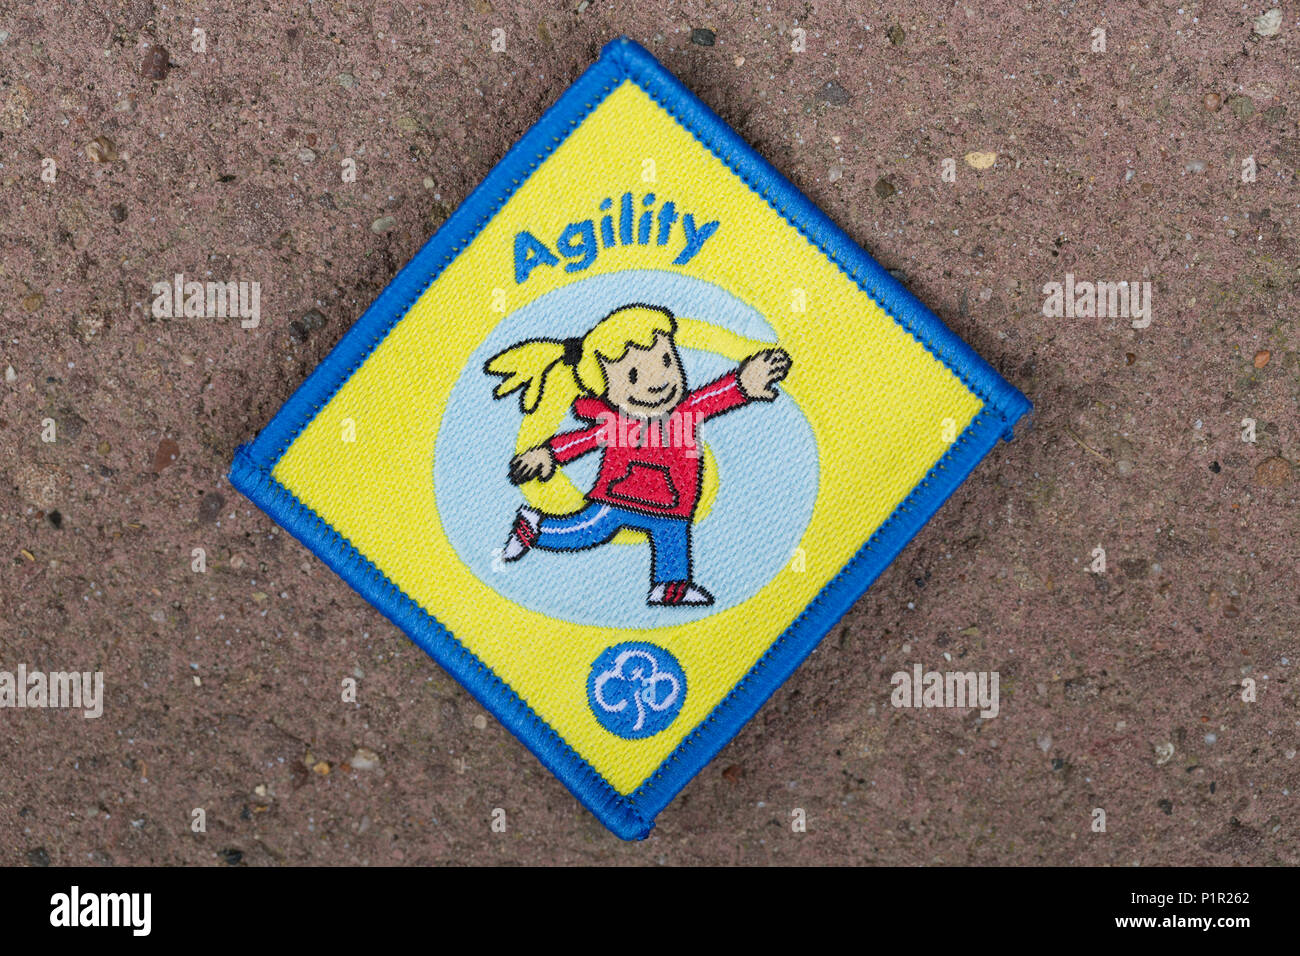 Agility Girl Guide / Brownies badge Stock Photo